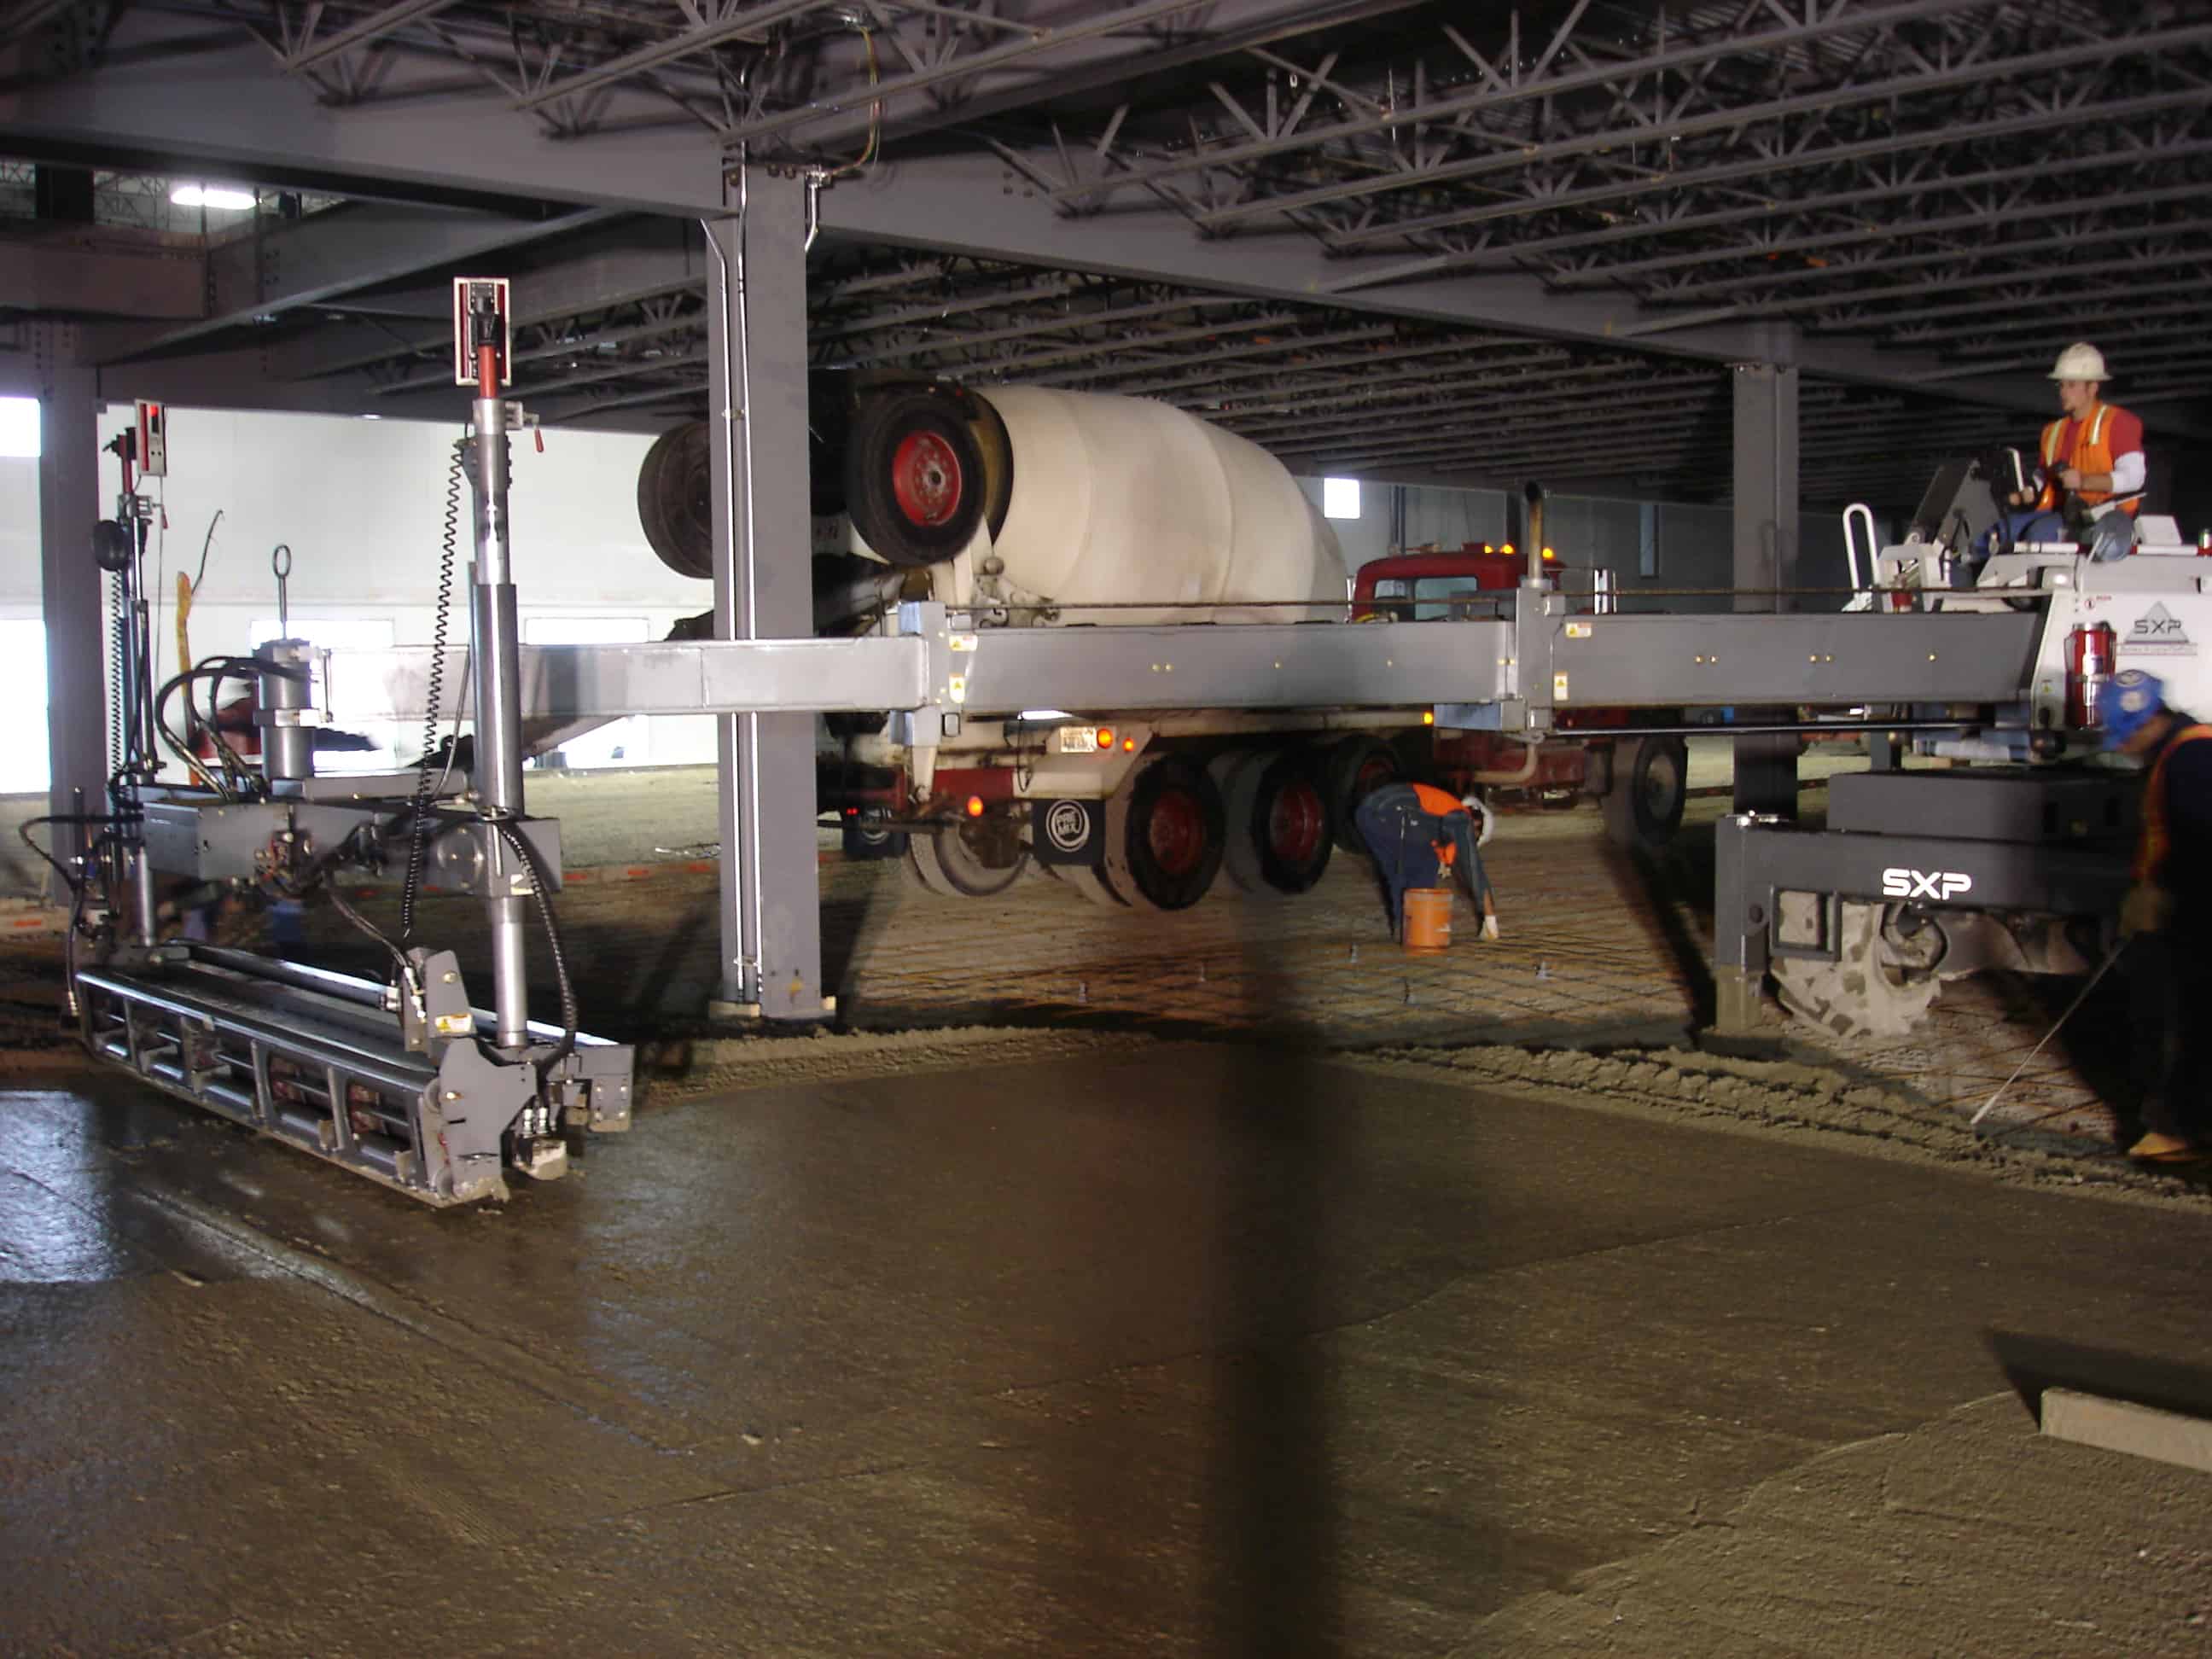 Laser screed interior concrete slab floor